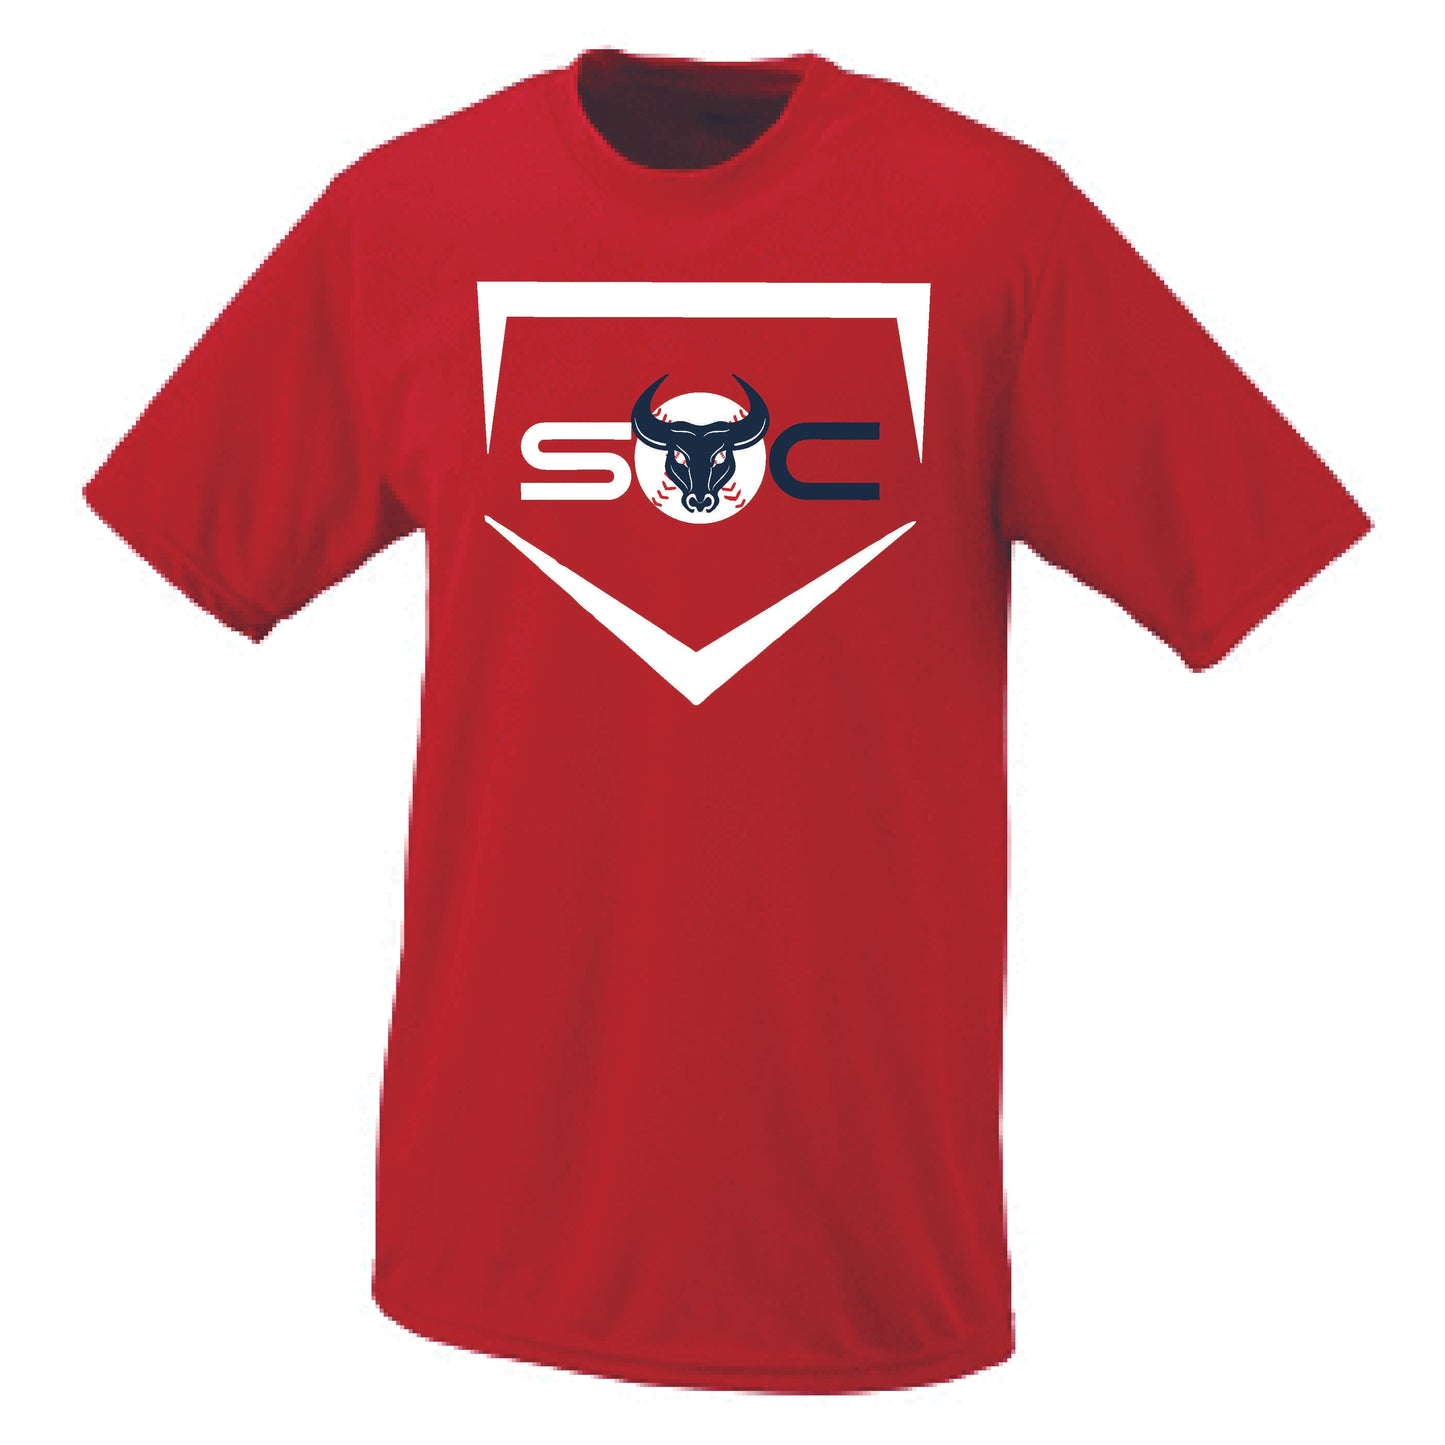 SC "Home Plate Logo" Cotton T-shirt